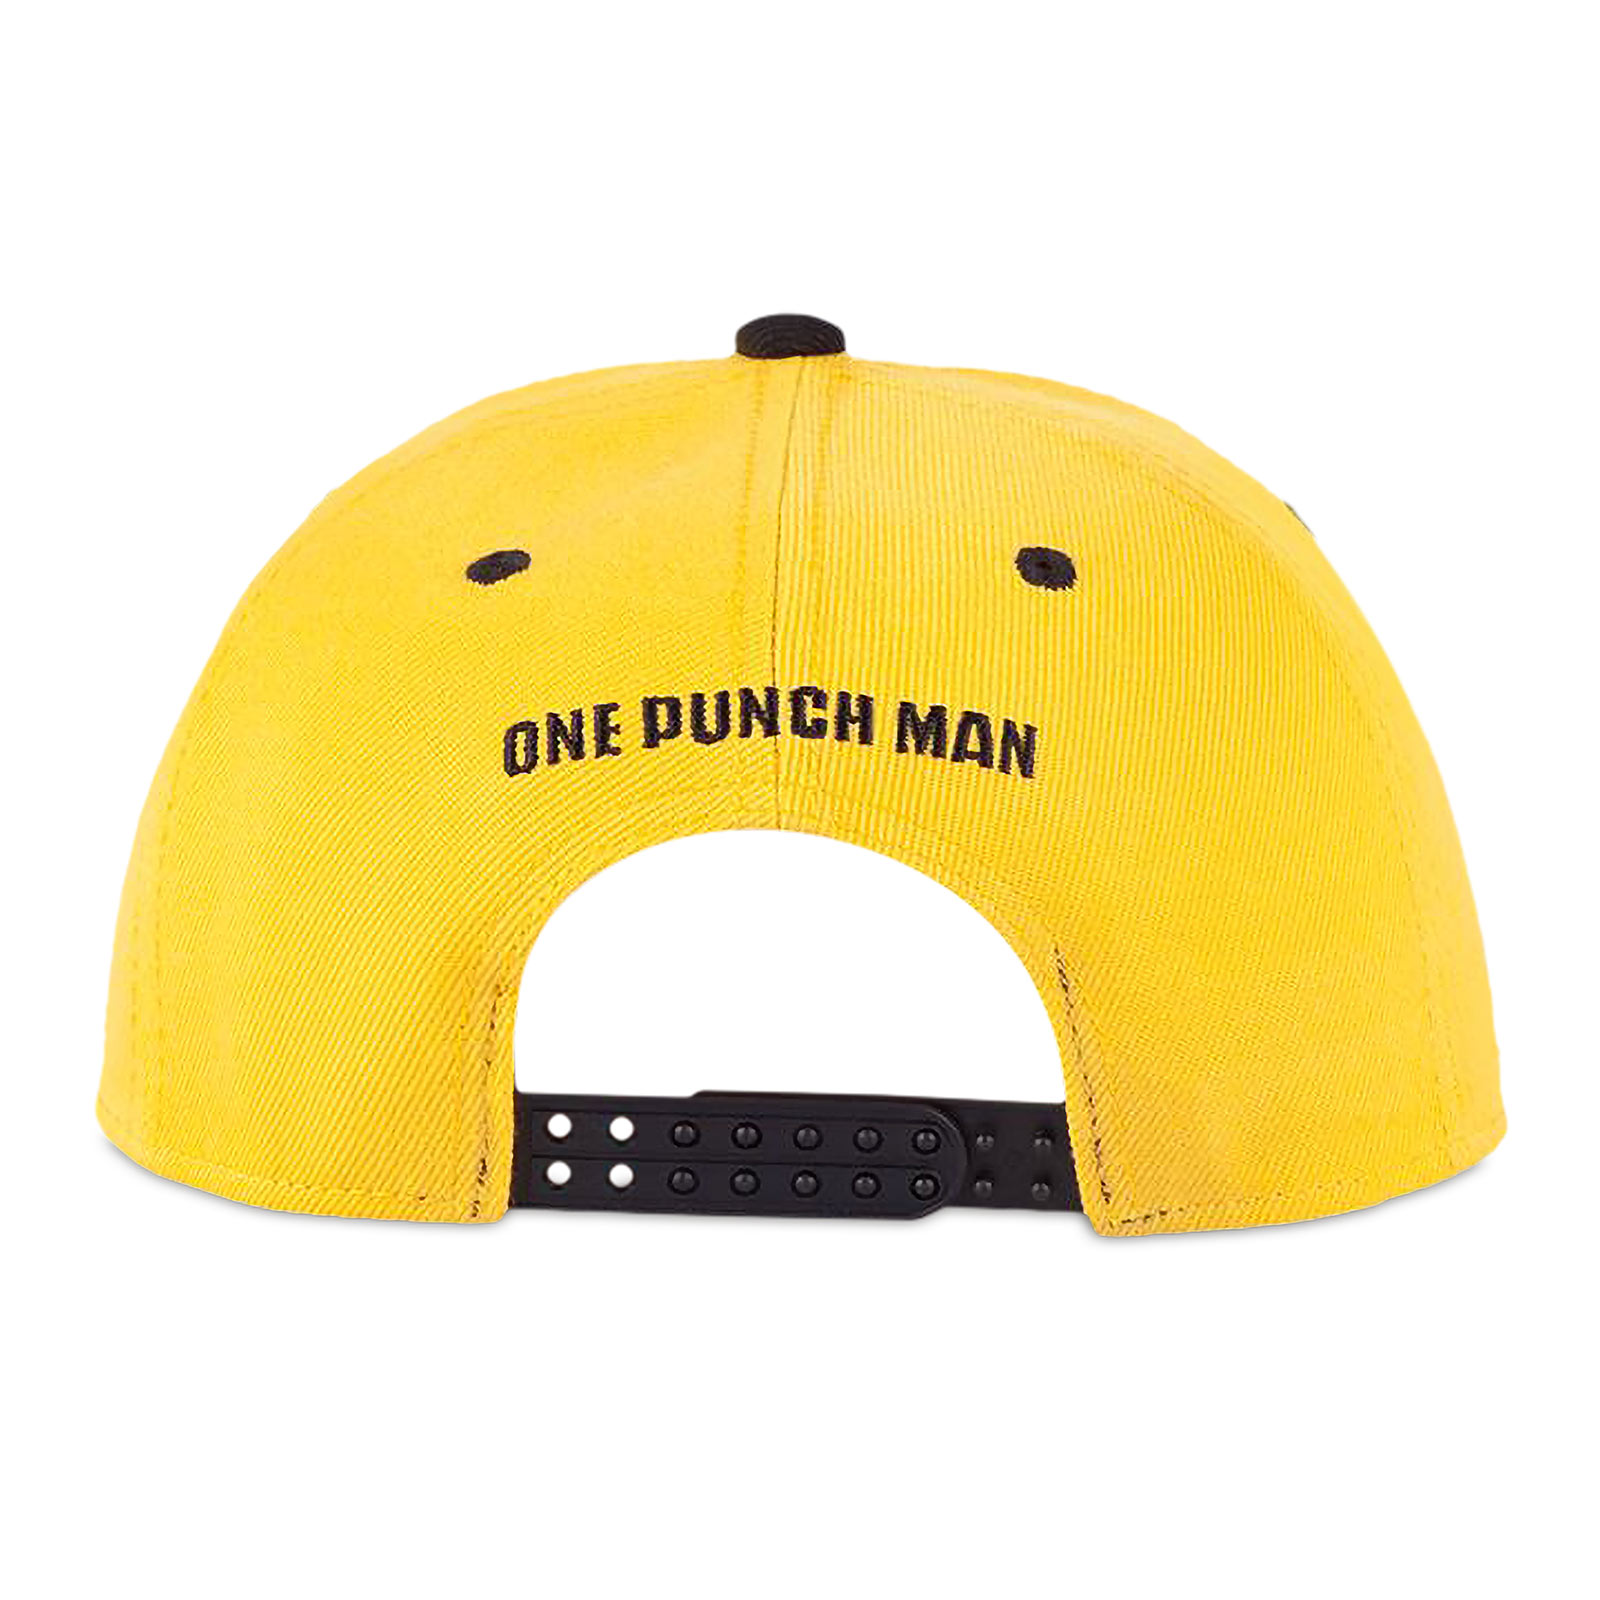 One Punch Man - Saitama Fist Snapback Cap